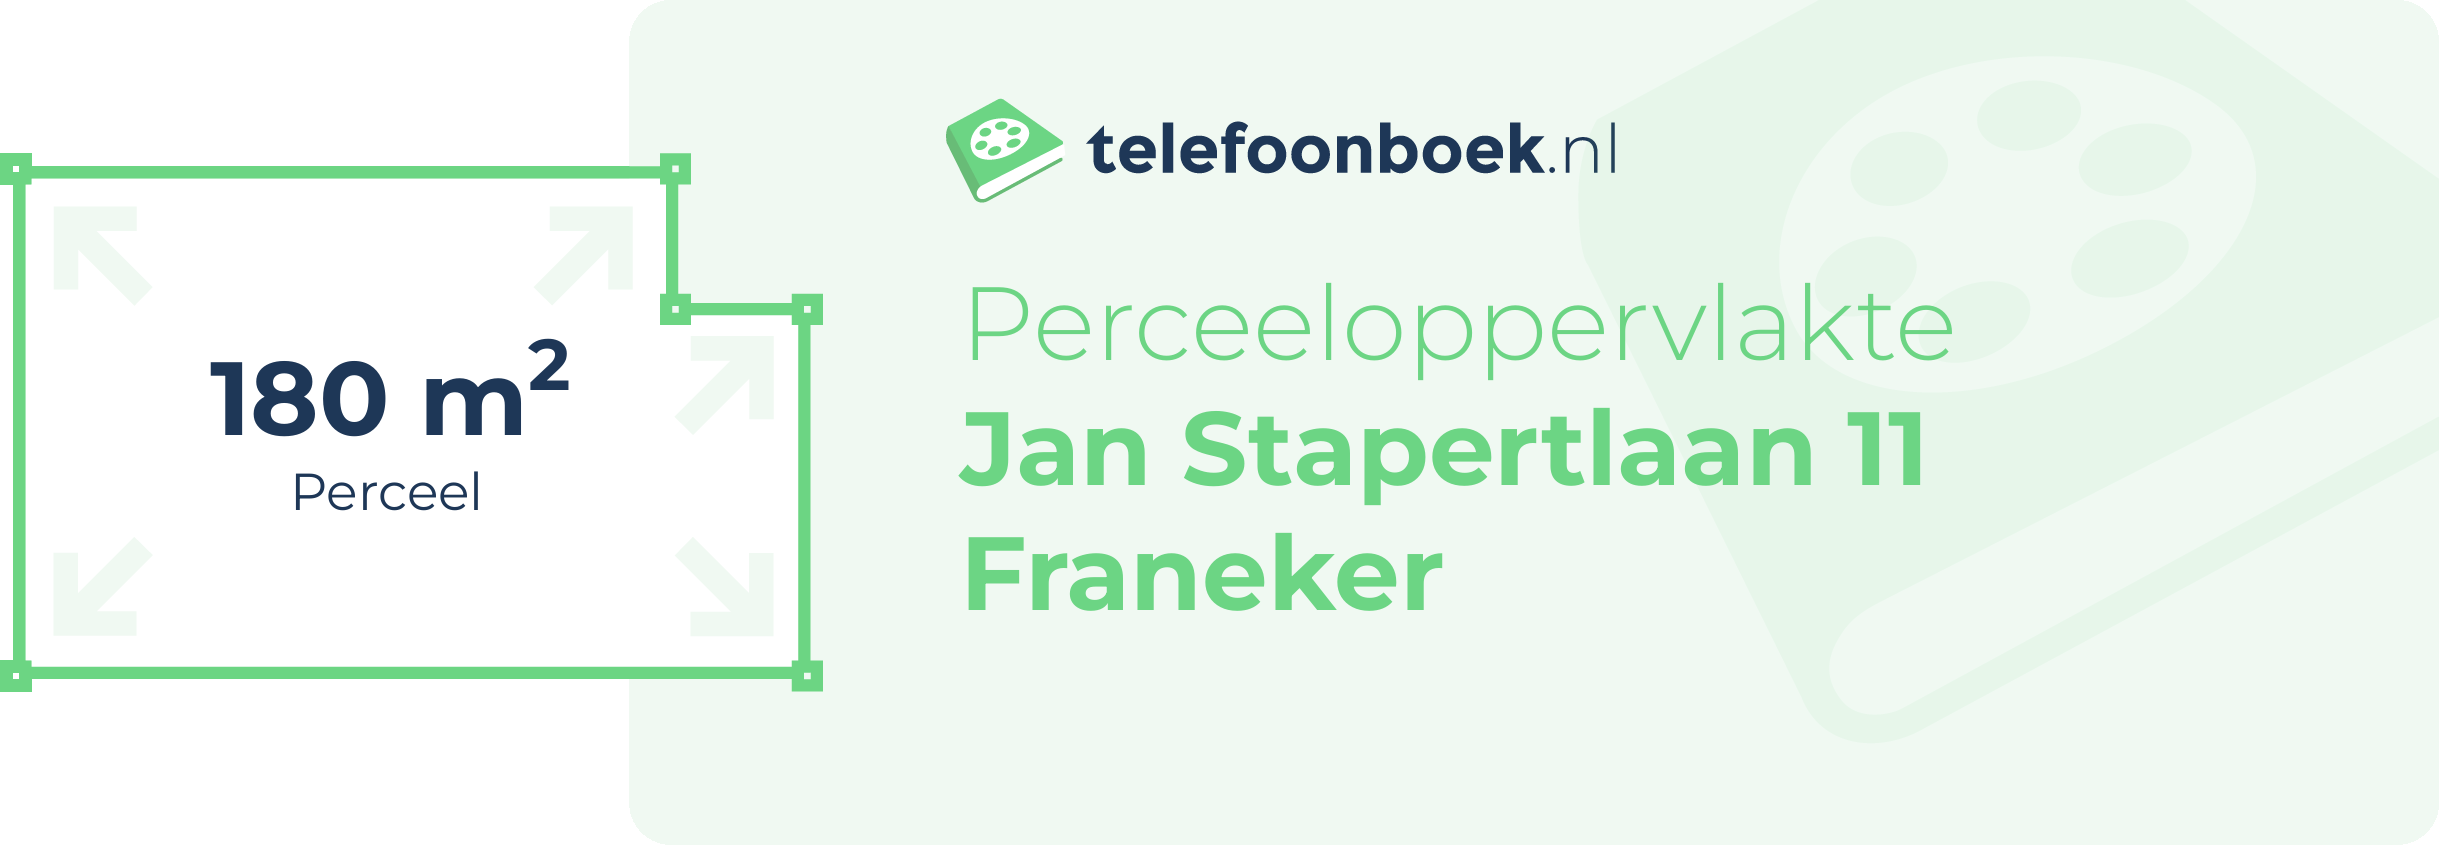 Perceeloppervlakte Jan Stapertlaan 11 Franeker